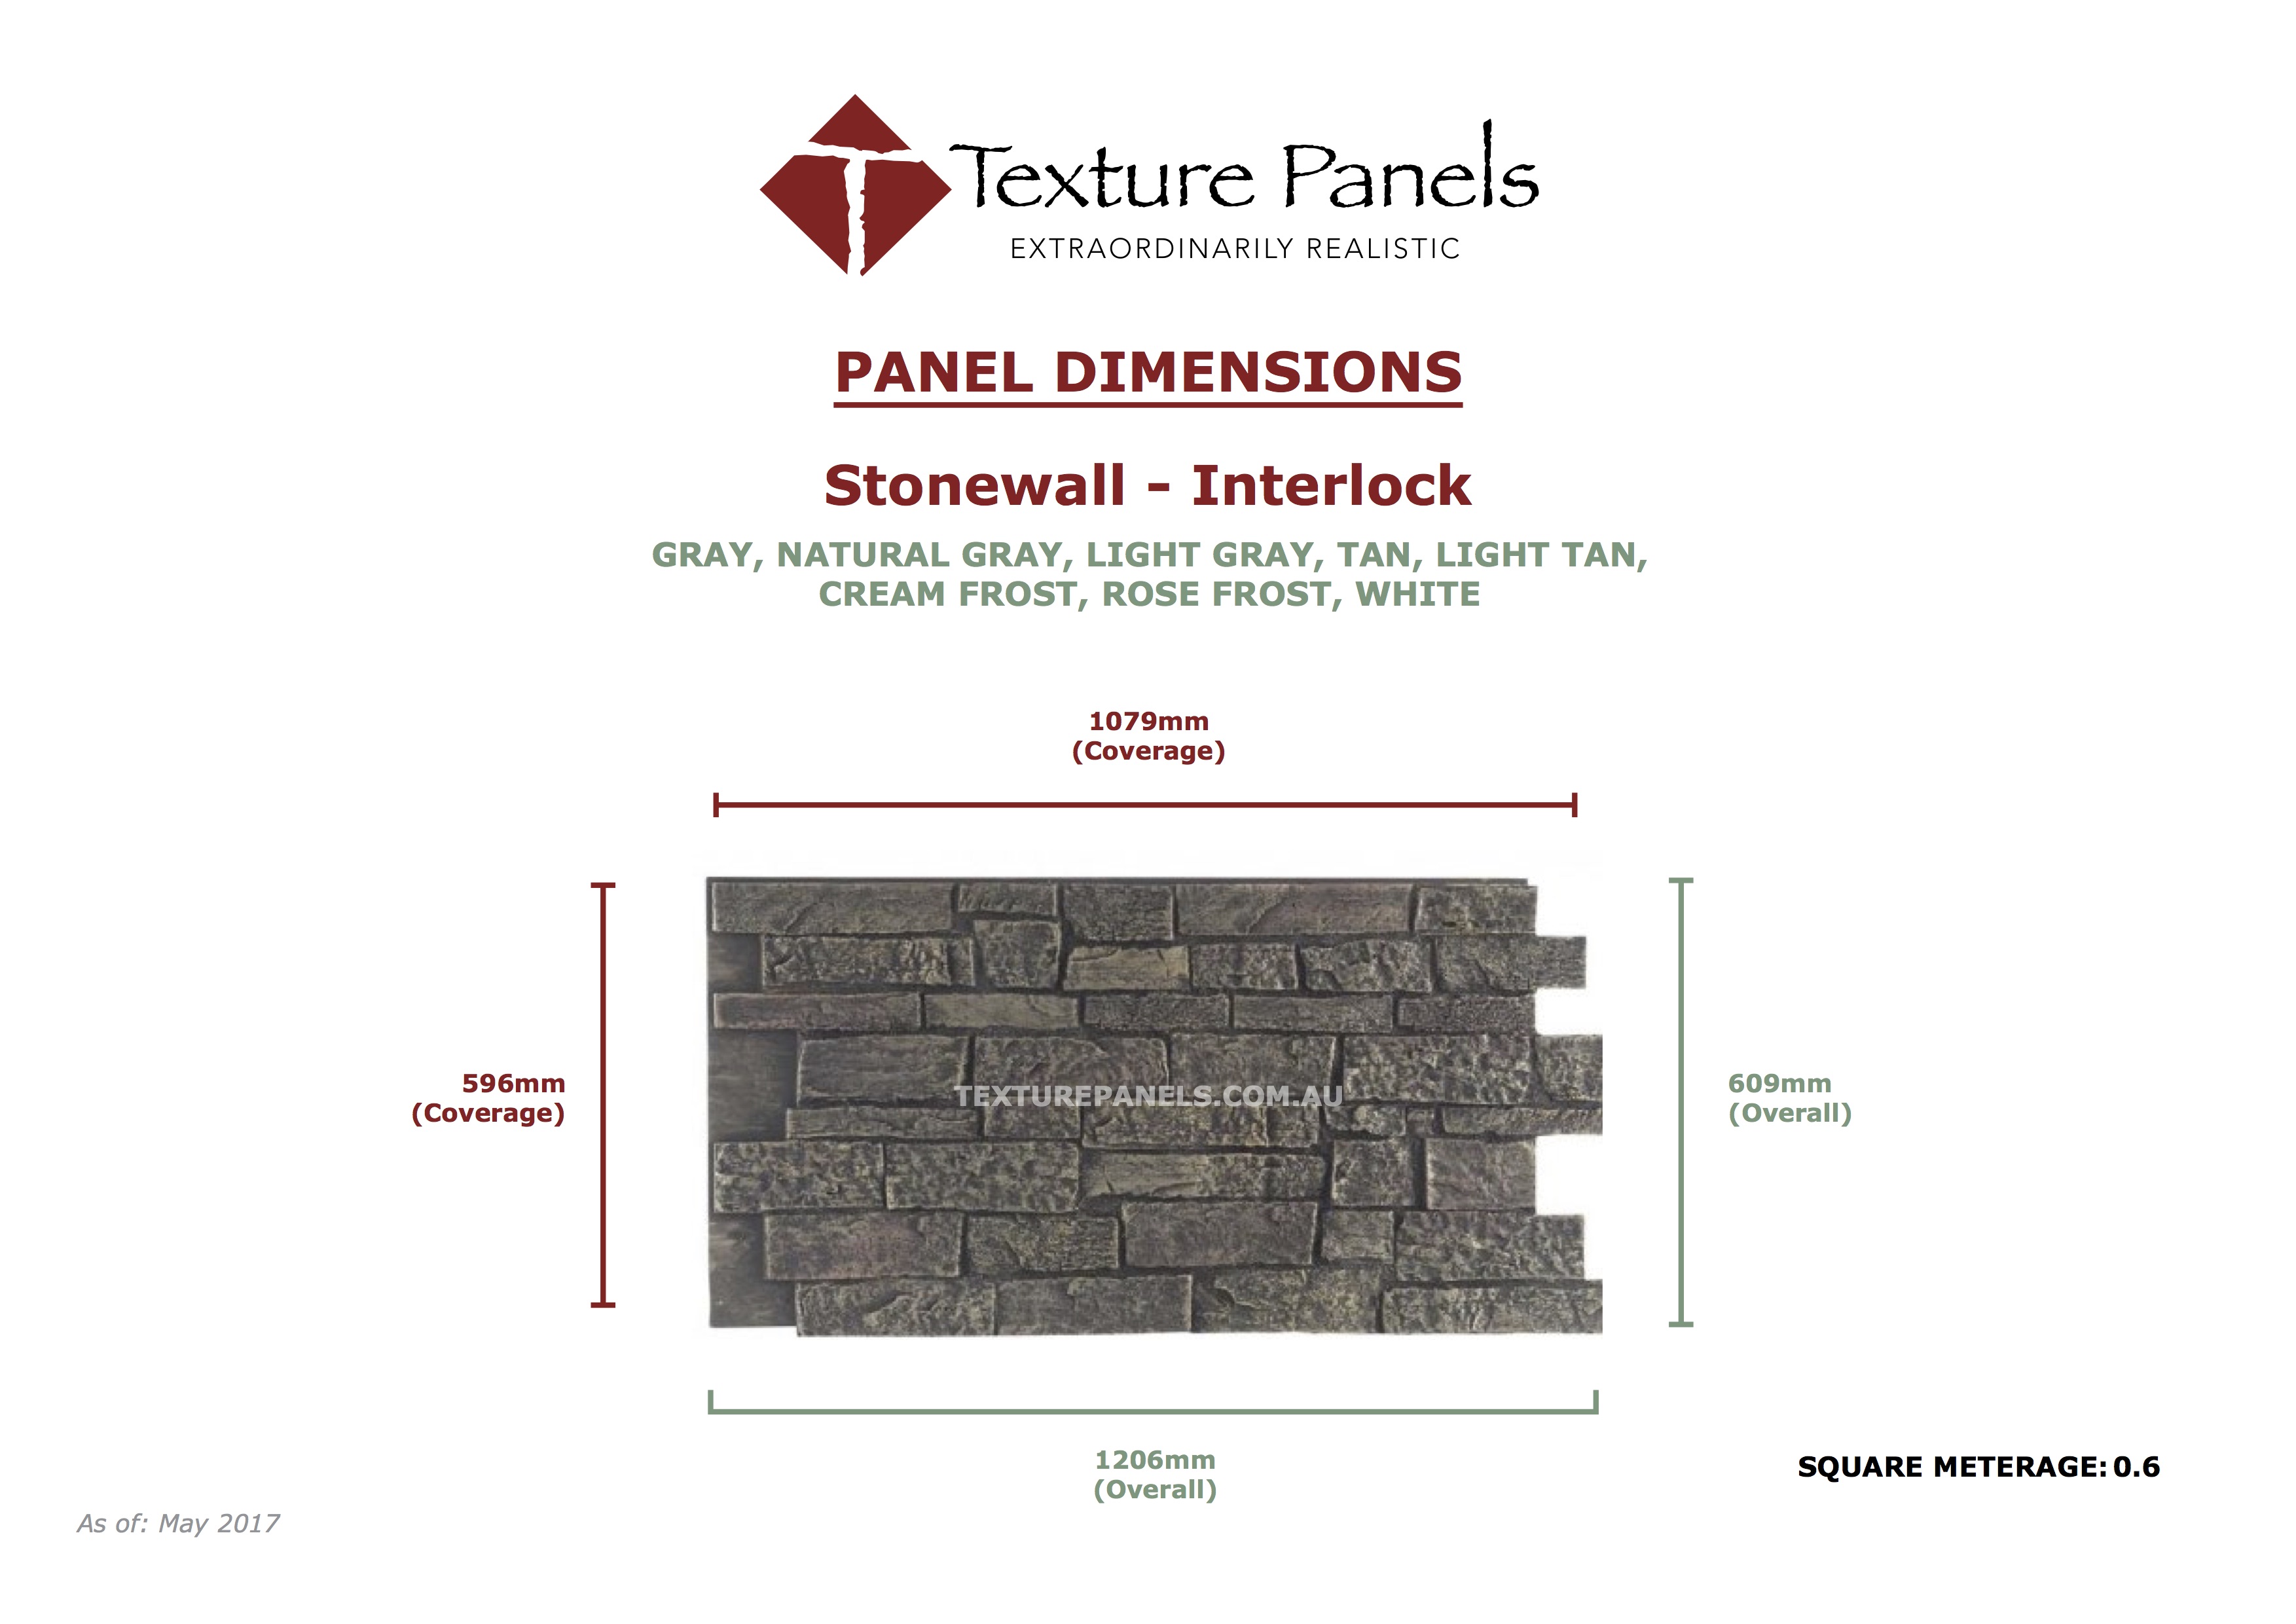 Stonewall Interlocked - Dimensions